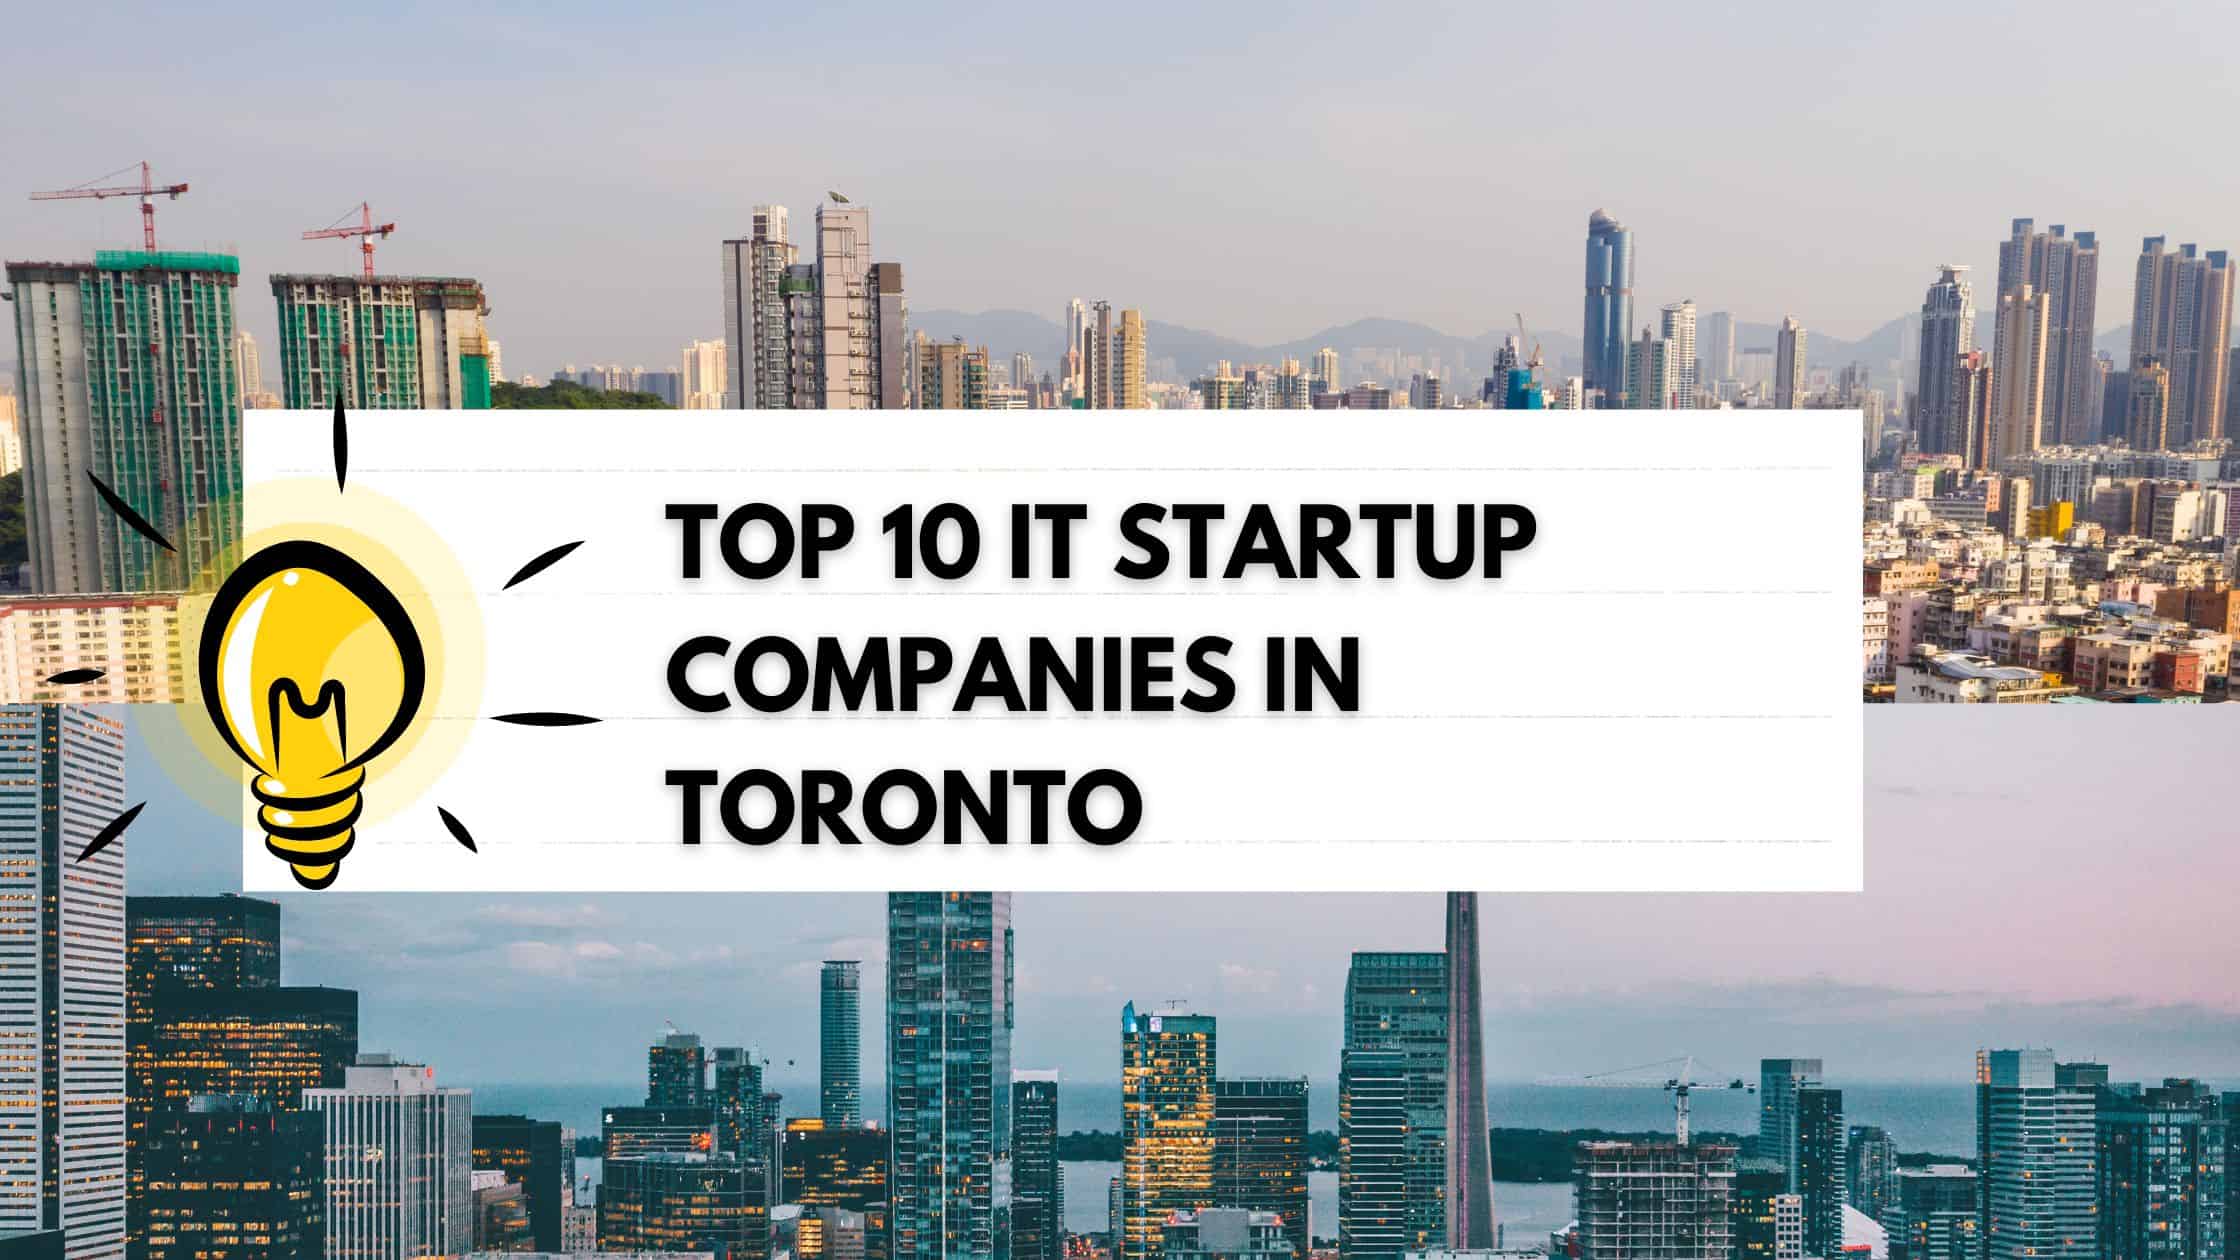 Top 10 IT Startup Companies in Toronto